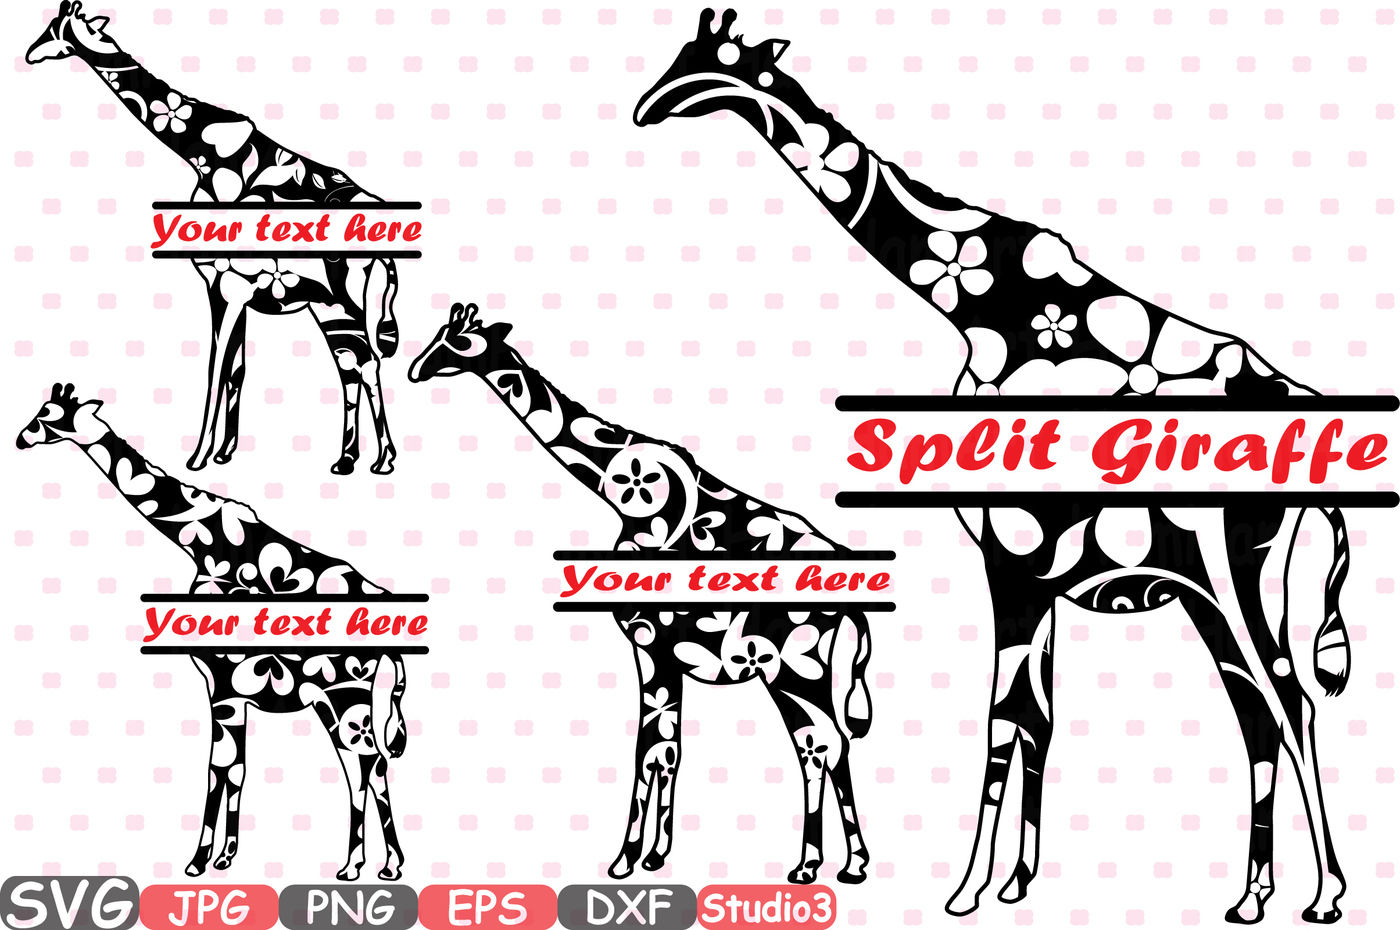 Download Split Giraffe Mascot Jungle Animal Safari Monogram Circle Cutting Files Your Text Svg Silhouette Clipart Cricut Design Studio3 Cameo 392s By Hamhamart Thehungryjpeg Com